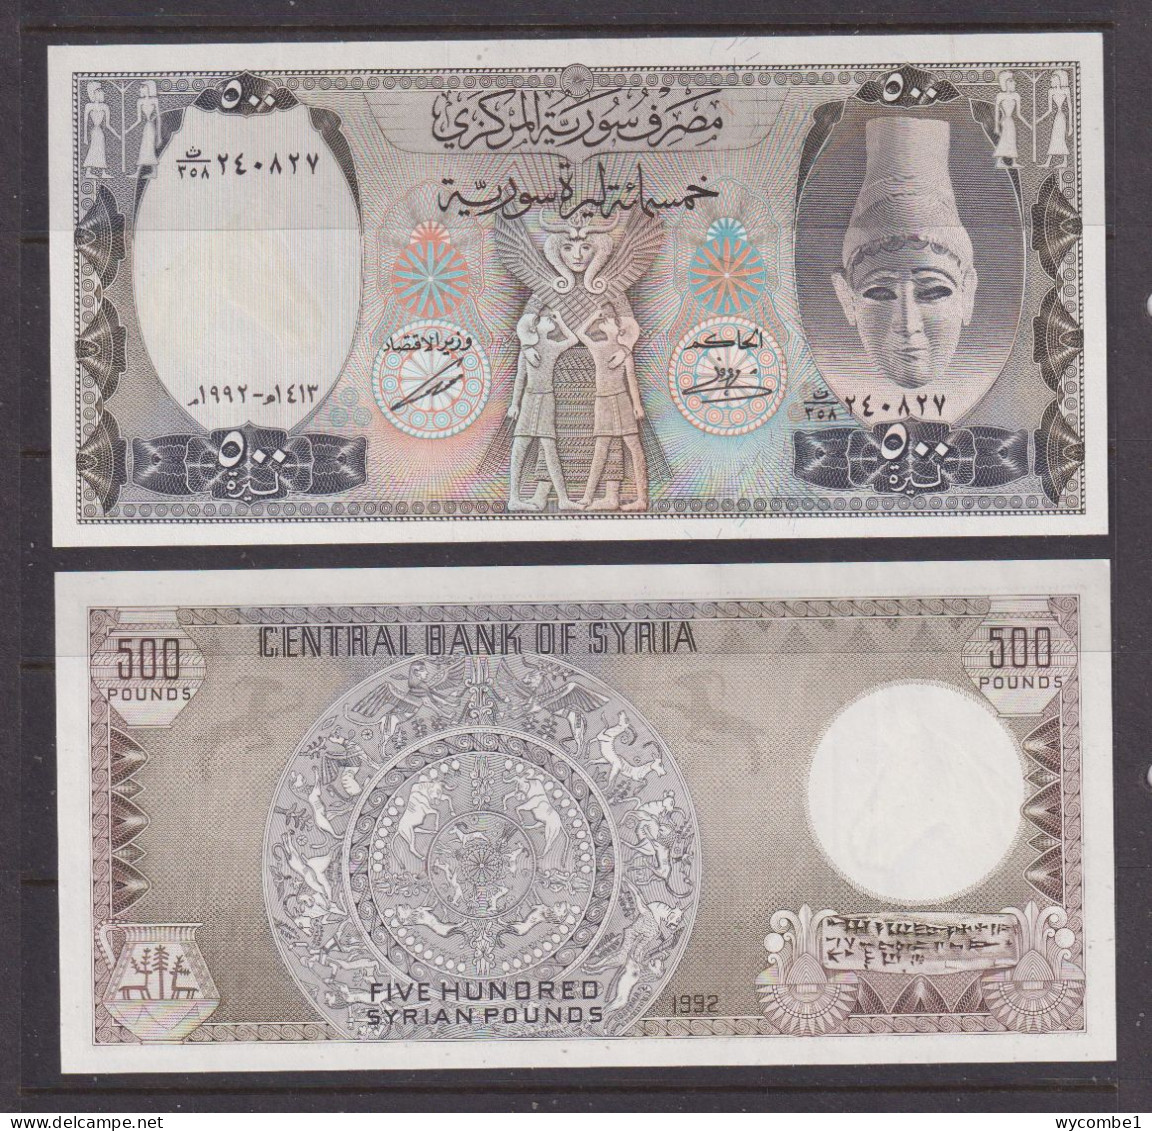 SYRIA  -  1992  500 Pounds UNC Banknote - Syria